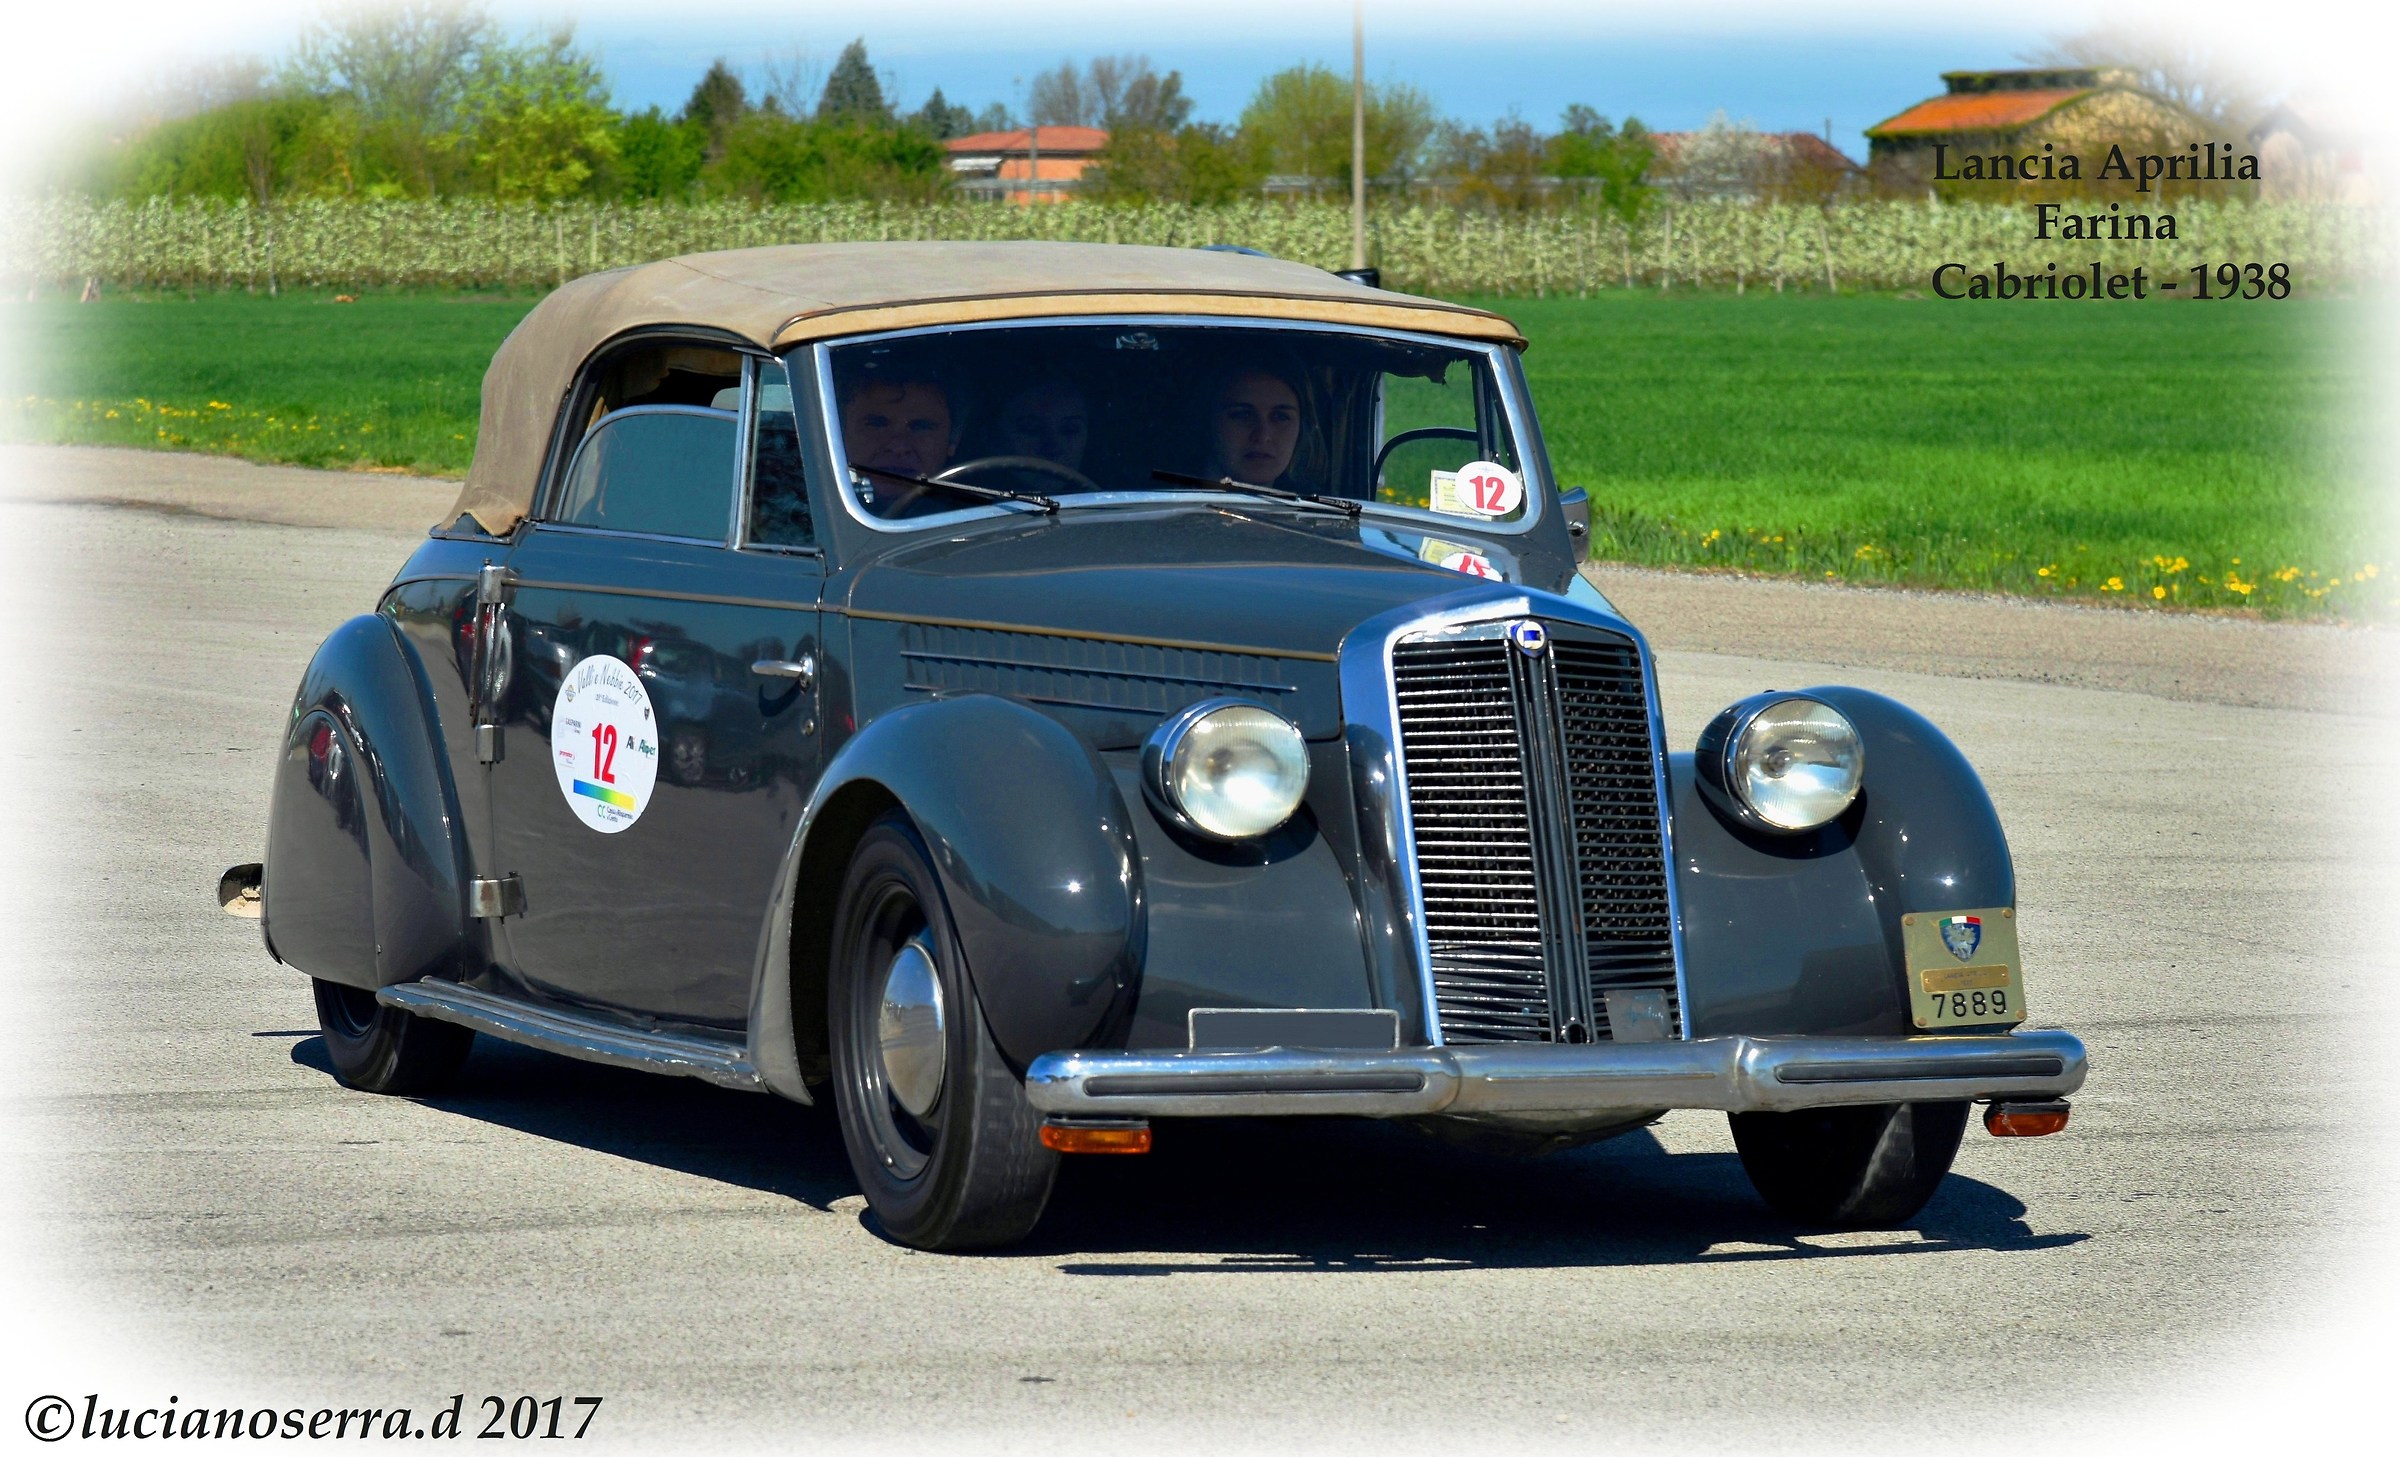 Lancia Aprilia "Farina" Convertible - 1938...